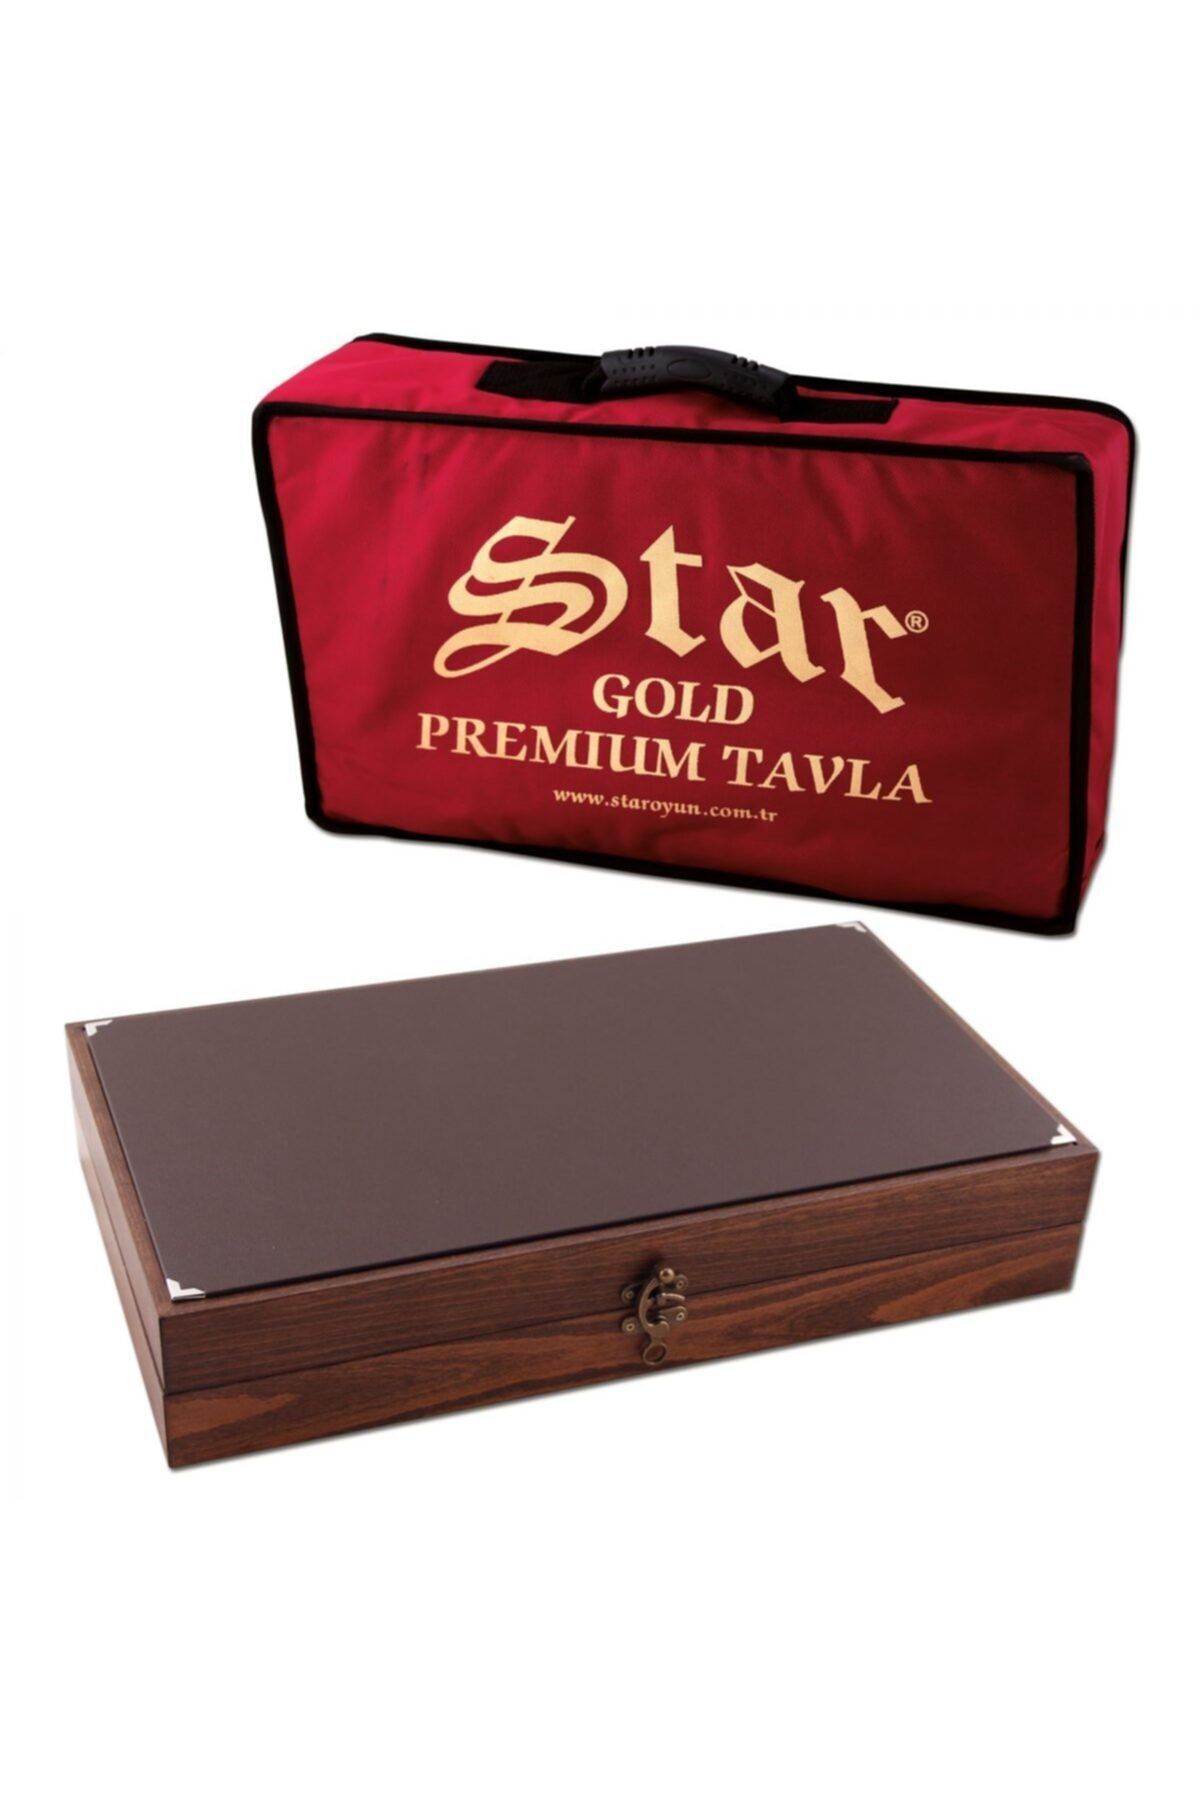 Star Okey Premium Gold Tavla